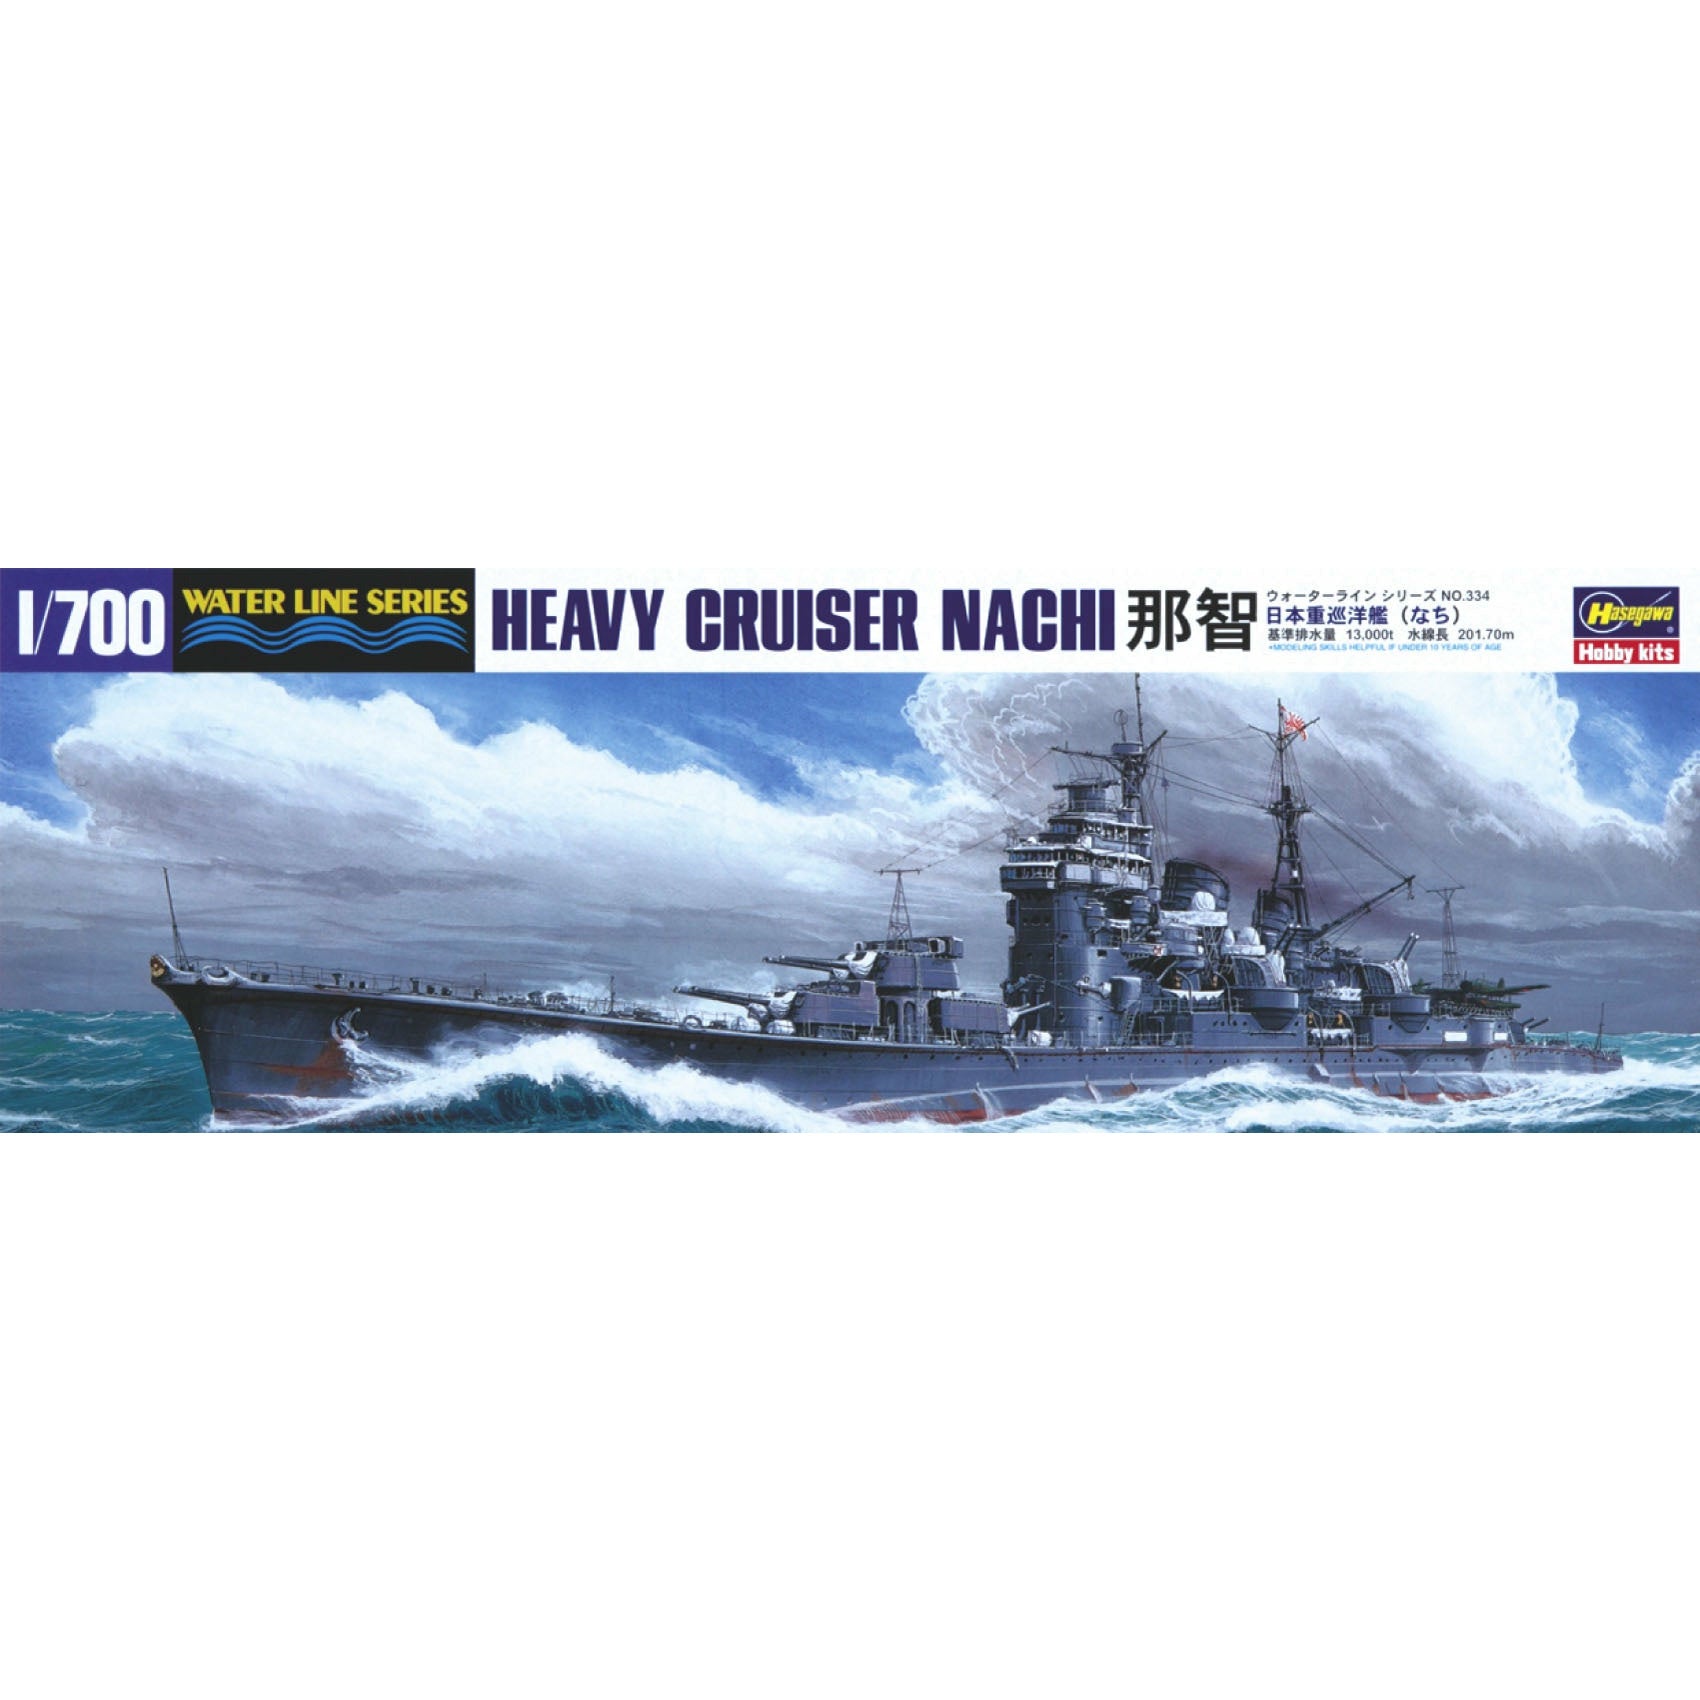 IJN Heavy Cruiser Nachi 1/700 Model Ship Kit #49334 by Hasegawa